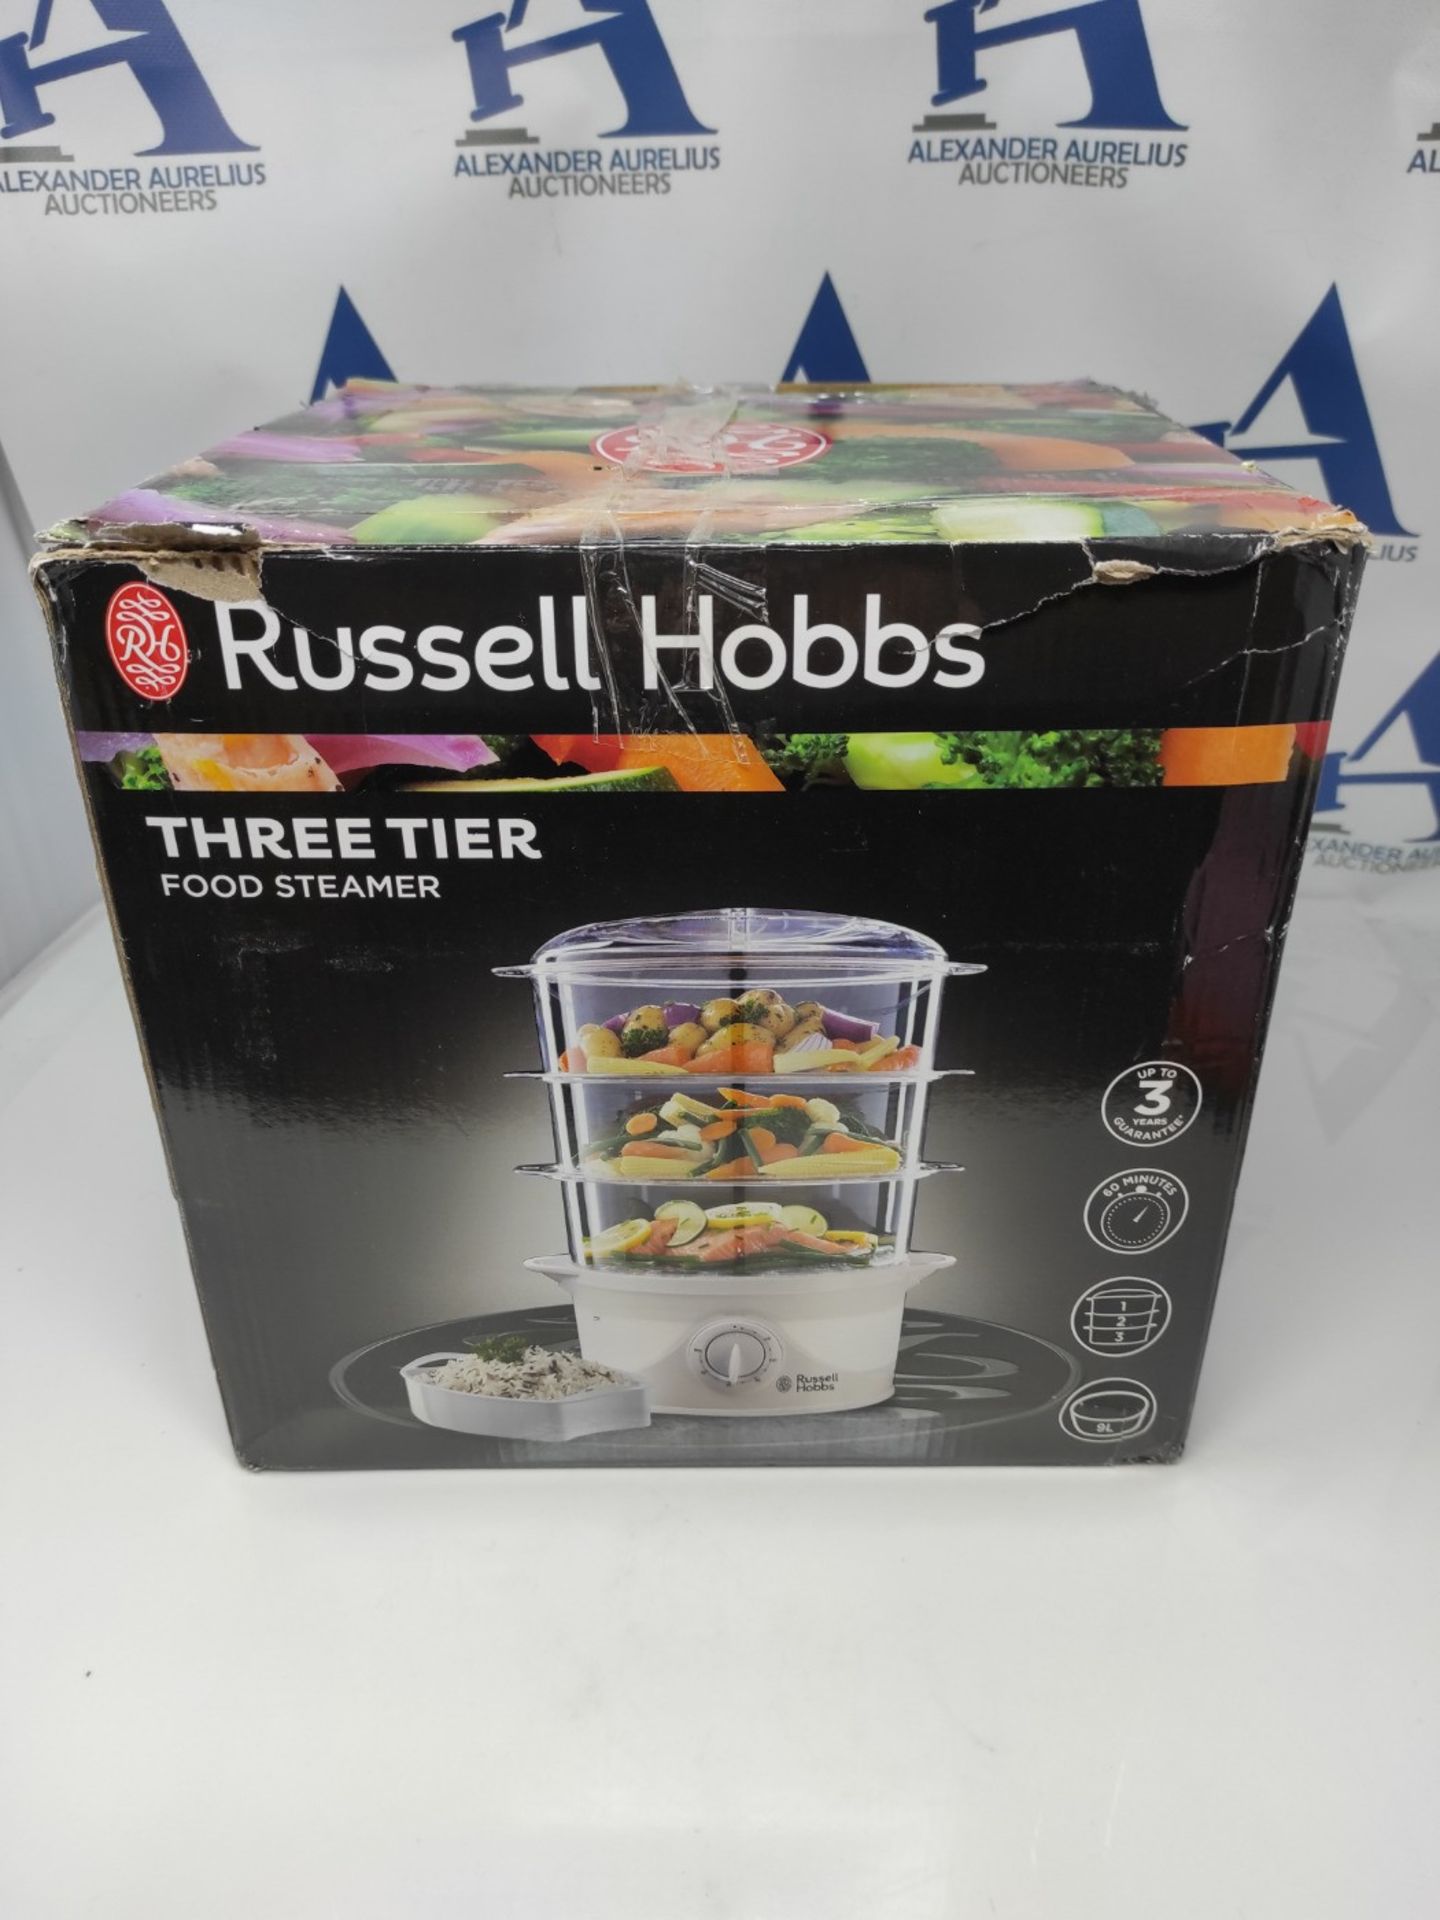 Russell Hobbs 3 Tier Electric Food Steamer, 9L, Dishwasher safe BPA free baskets, Stac - Image 2 of 3